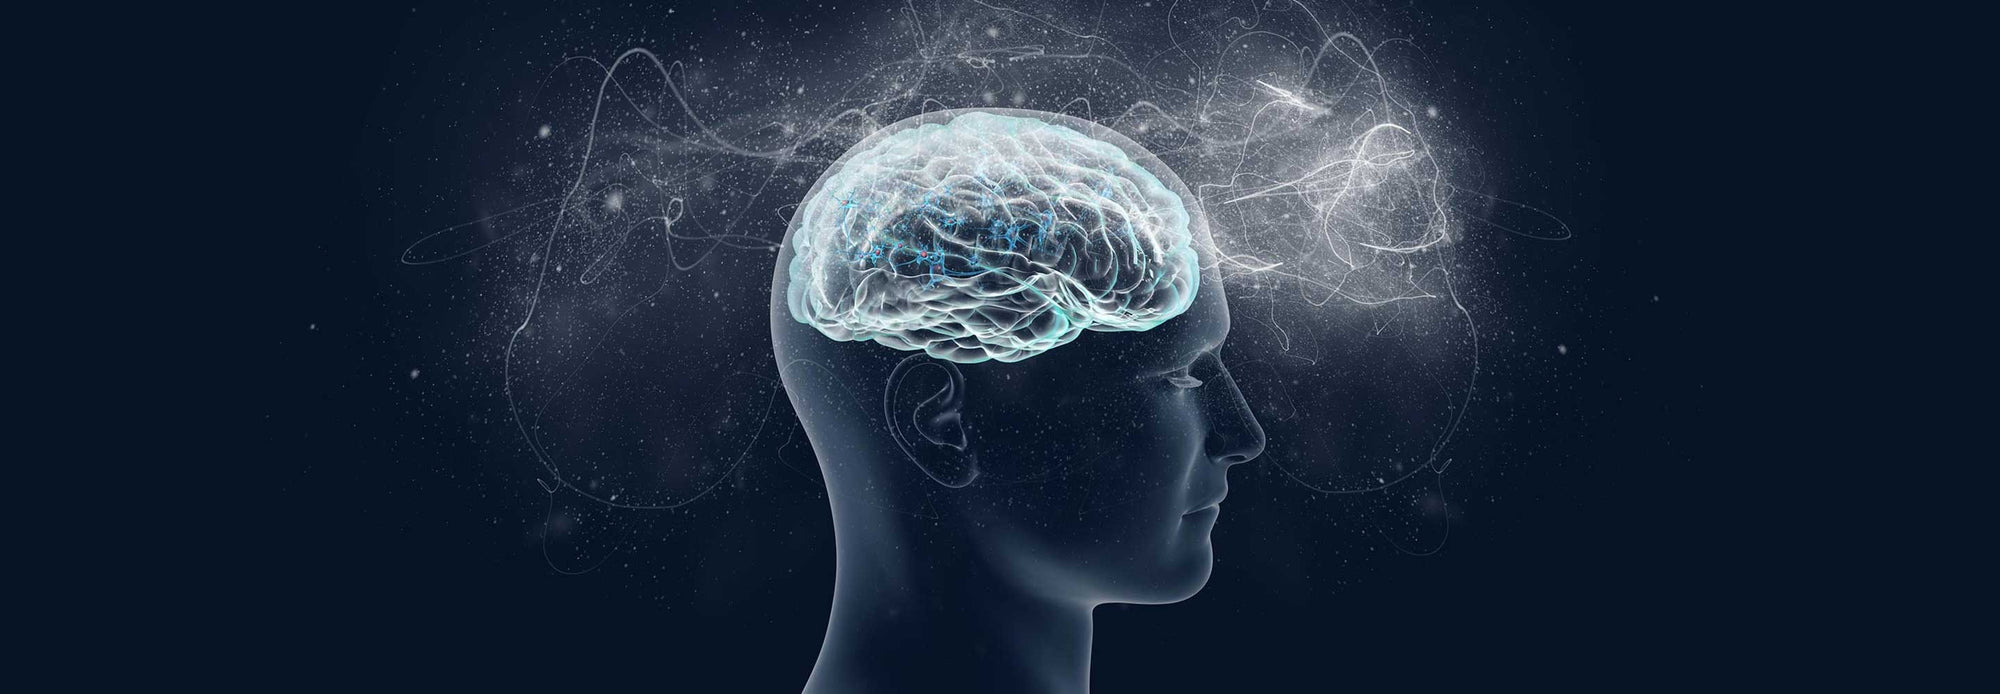 Illustration of brain in human head